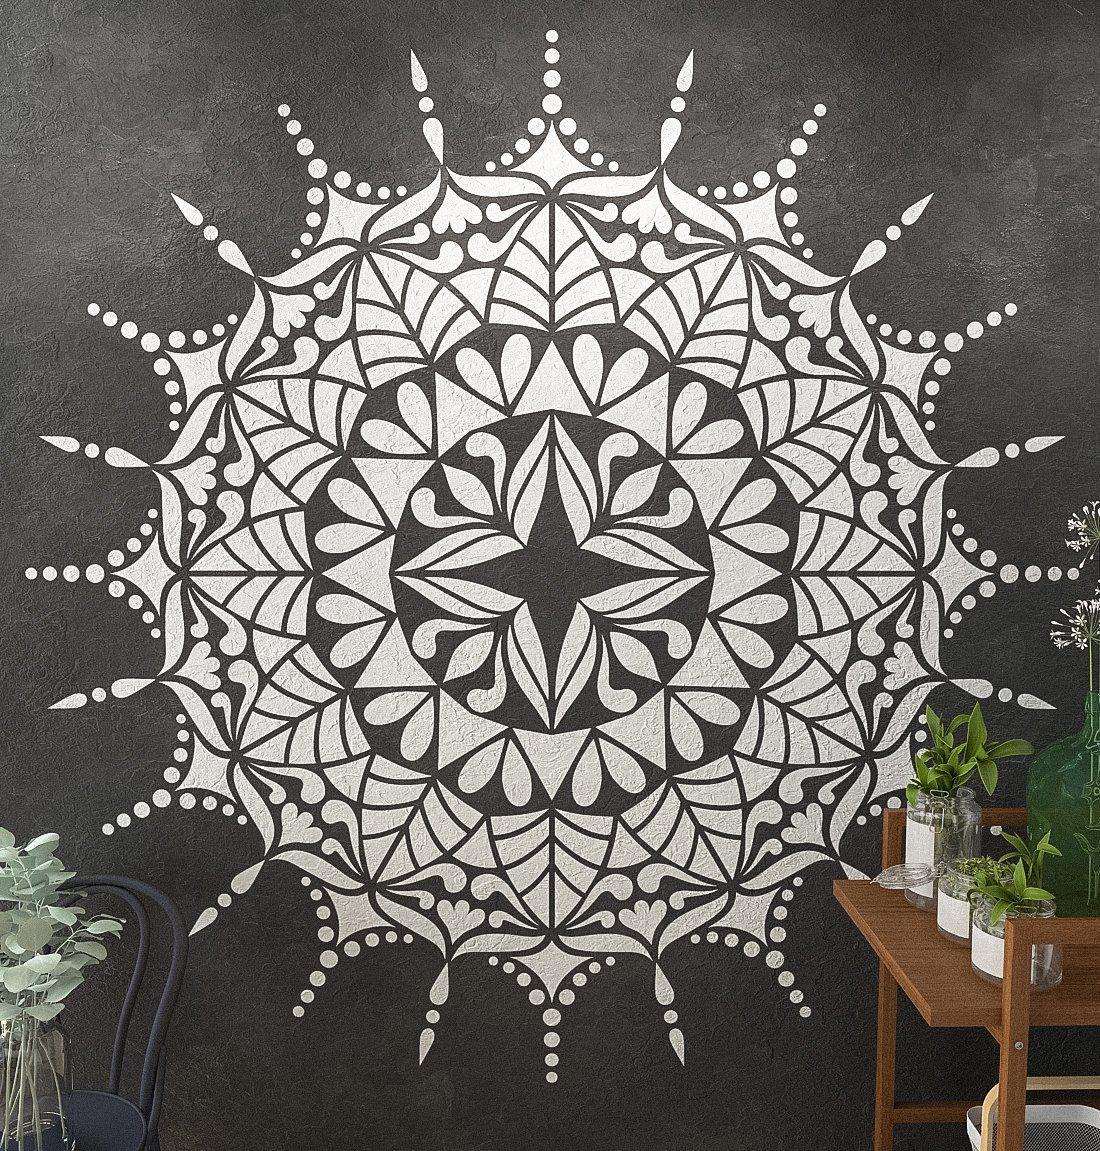 Large Wall Stencil - Mandala Stencil Reusable Stencil (Multiple Sizes) 16